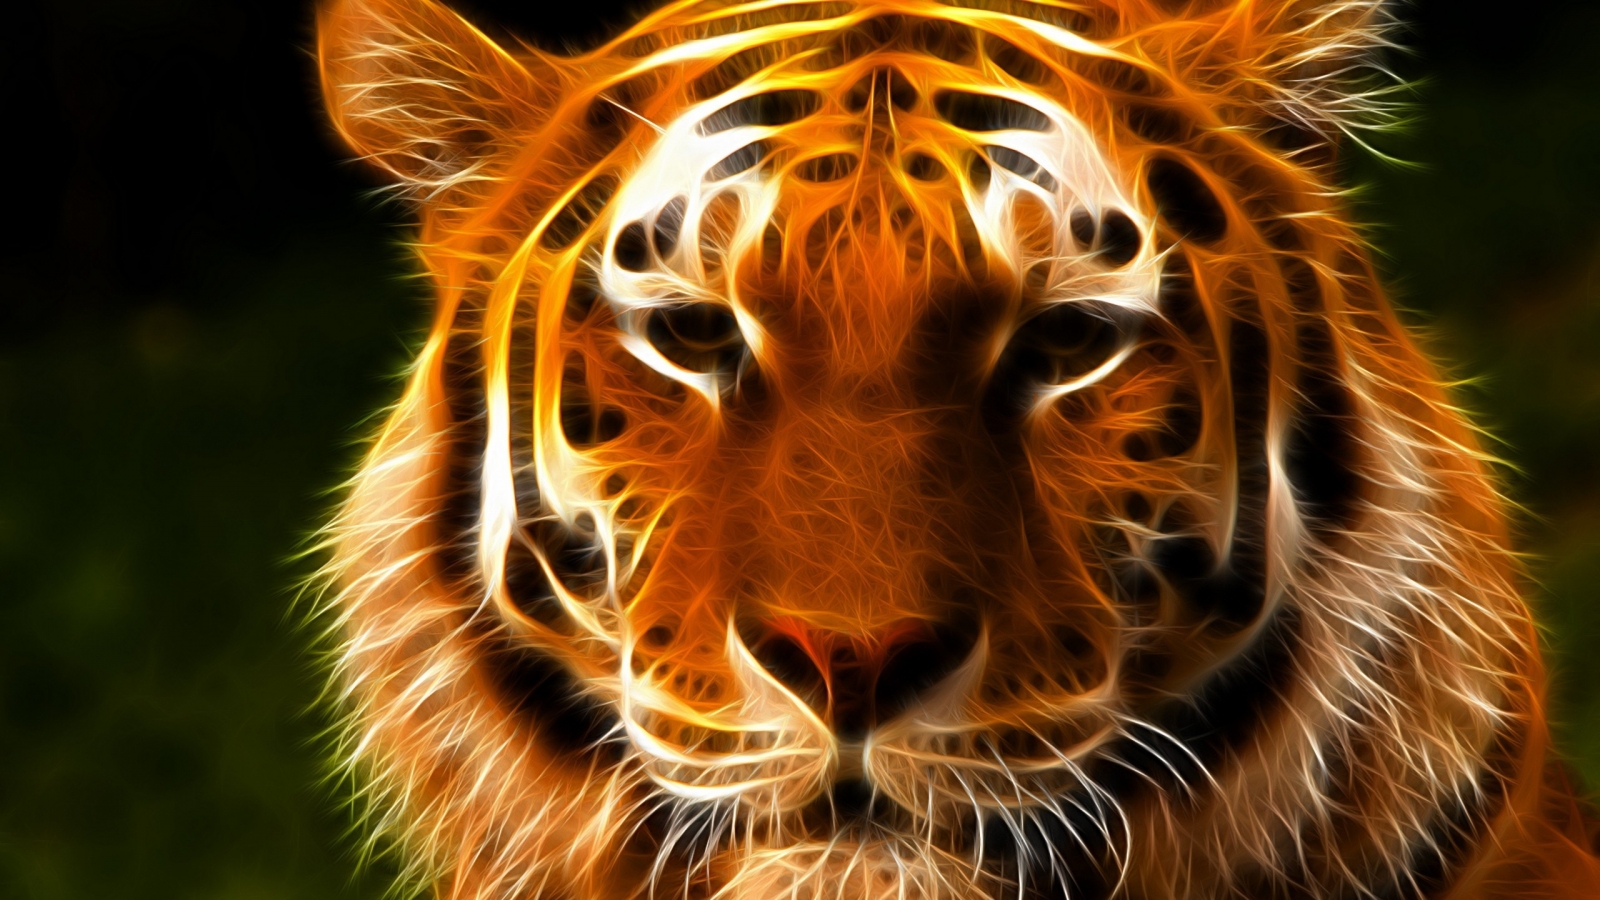 Tiger Face Art for 1600 x 900 HDTV resolution